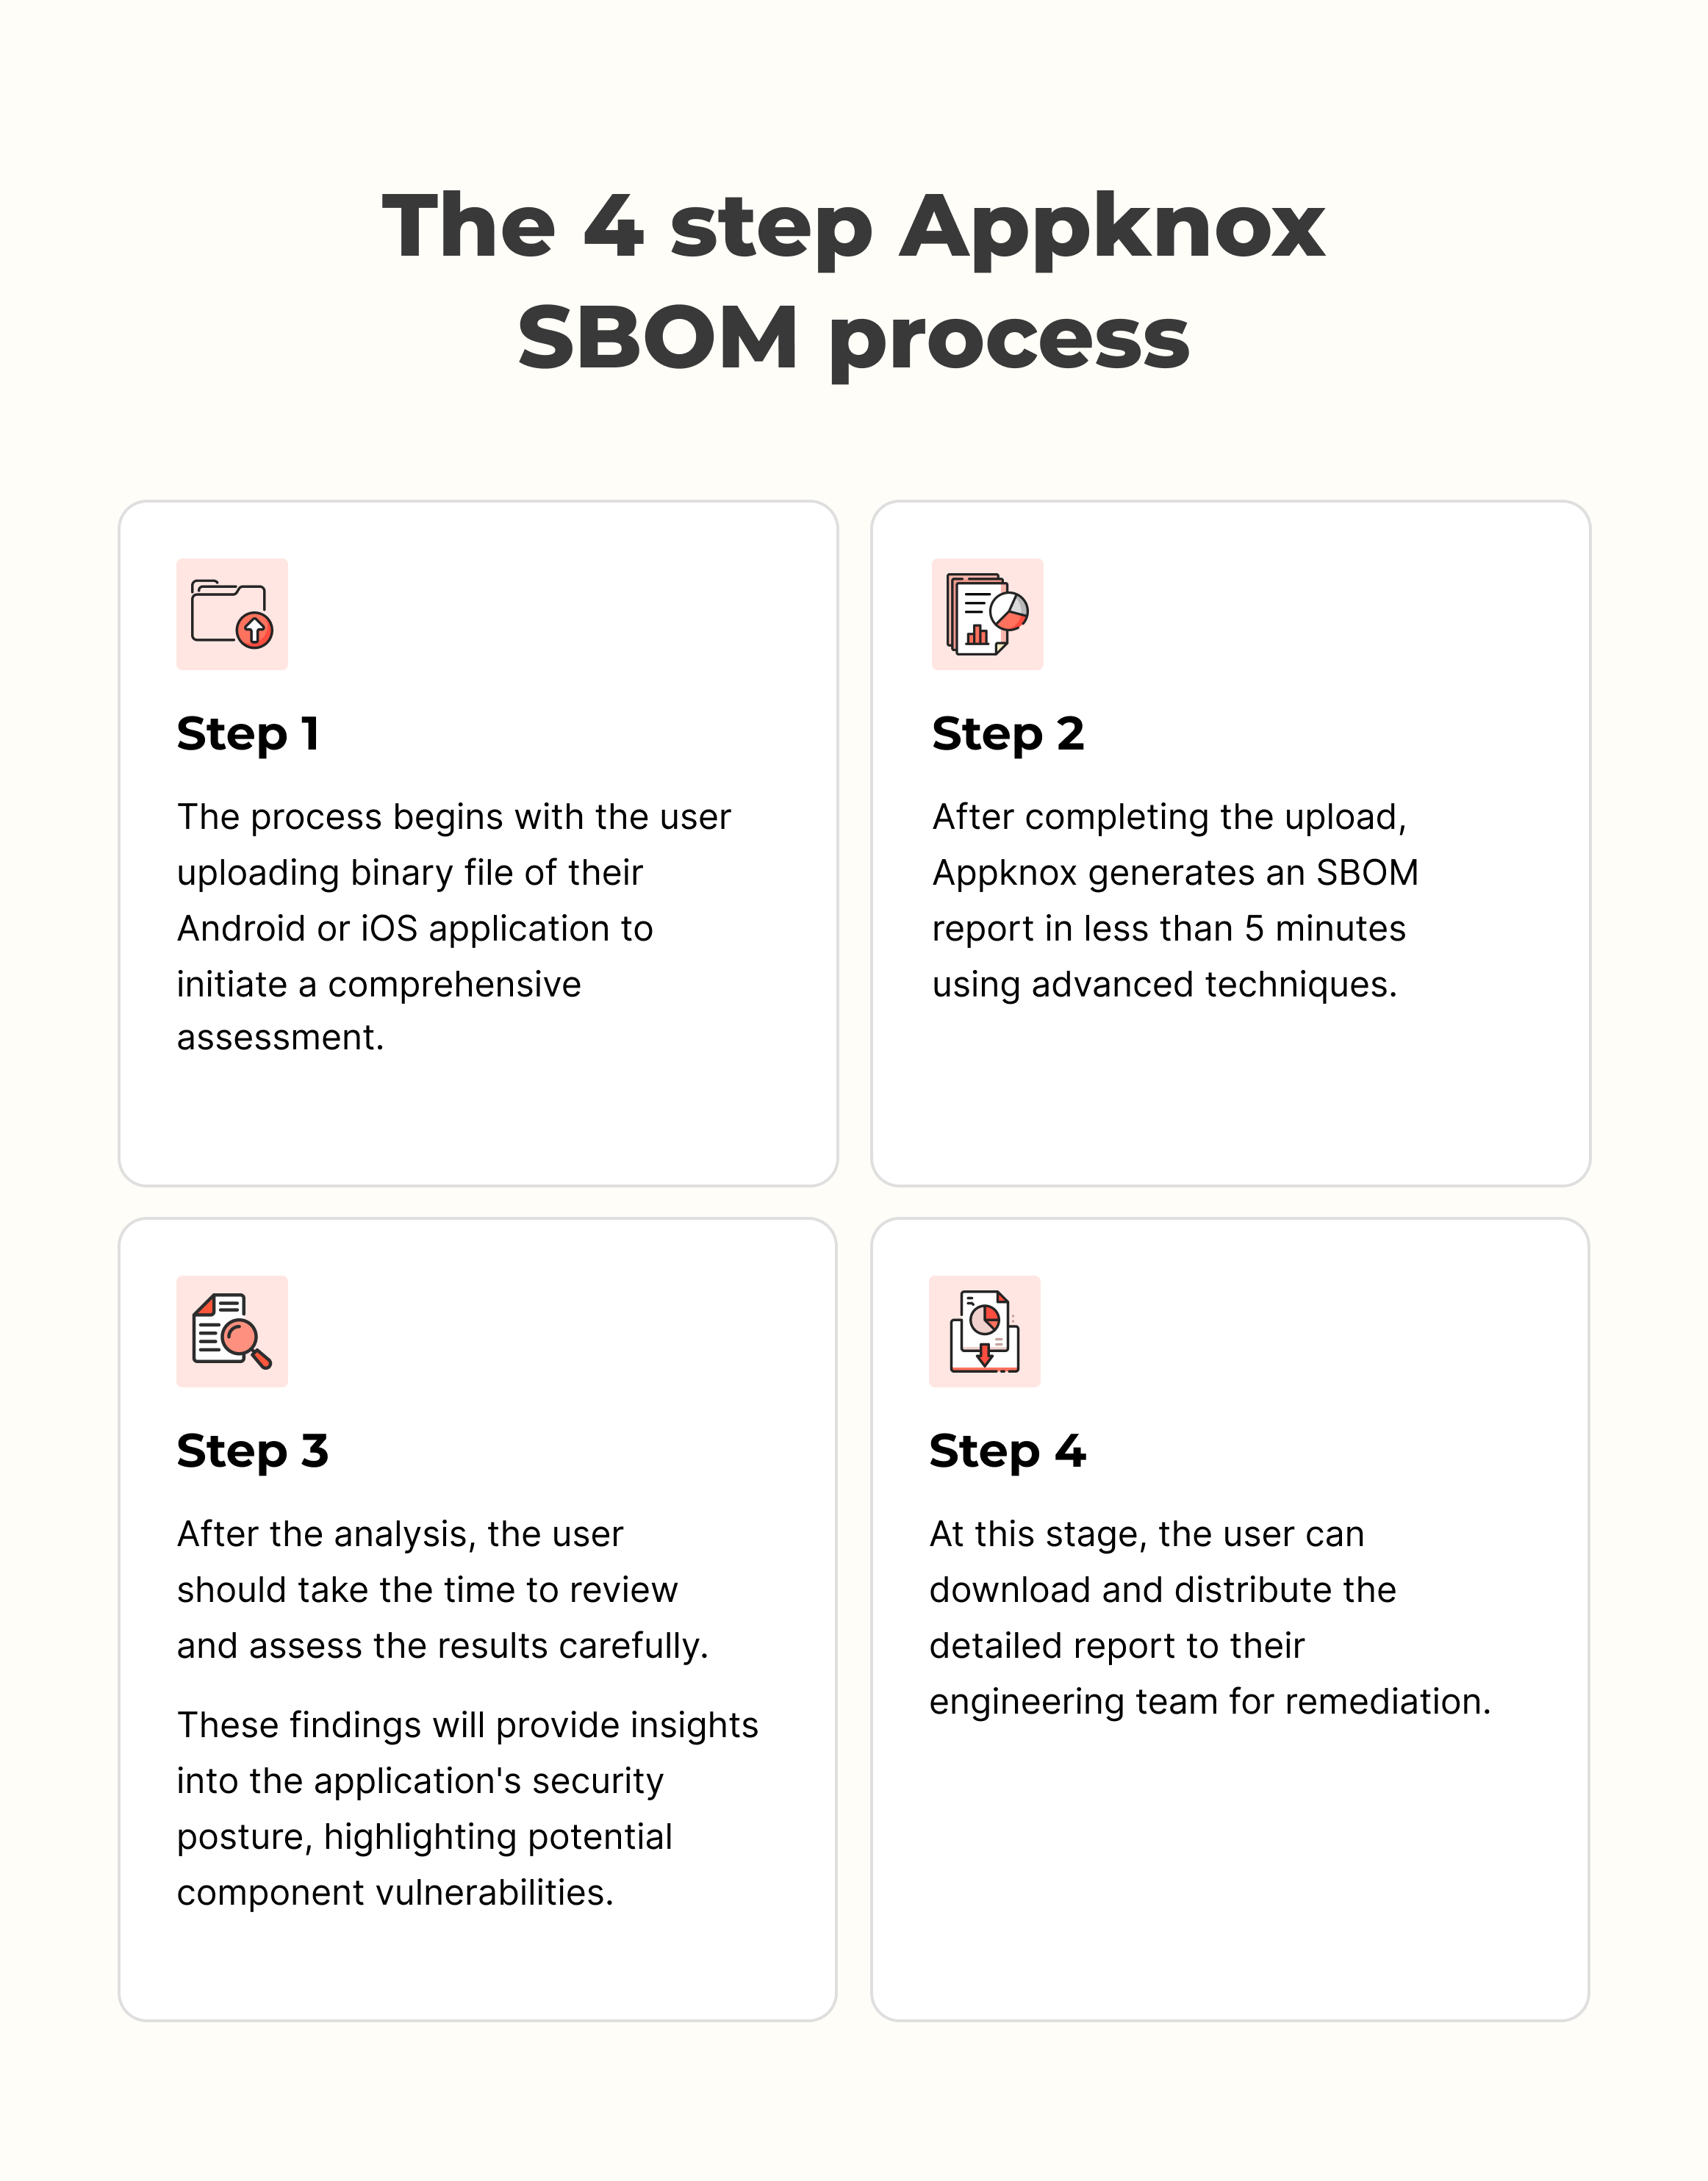 The 4 step Appknox SBOM process